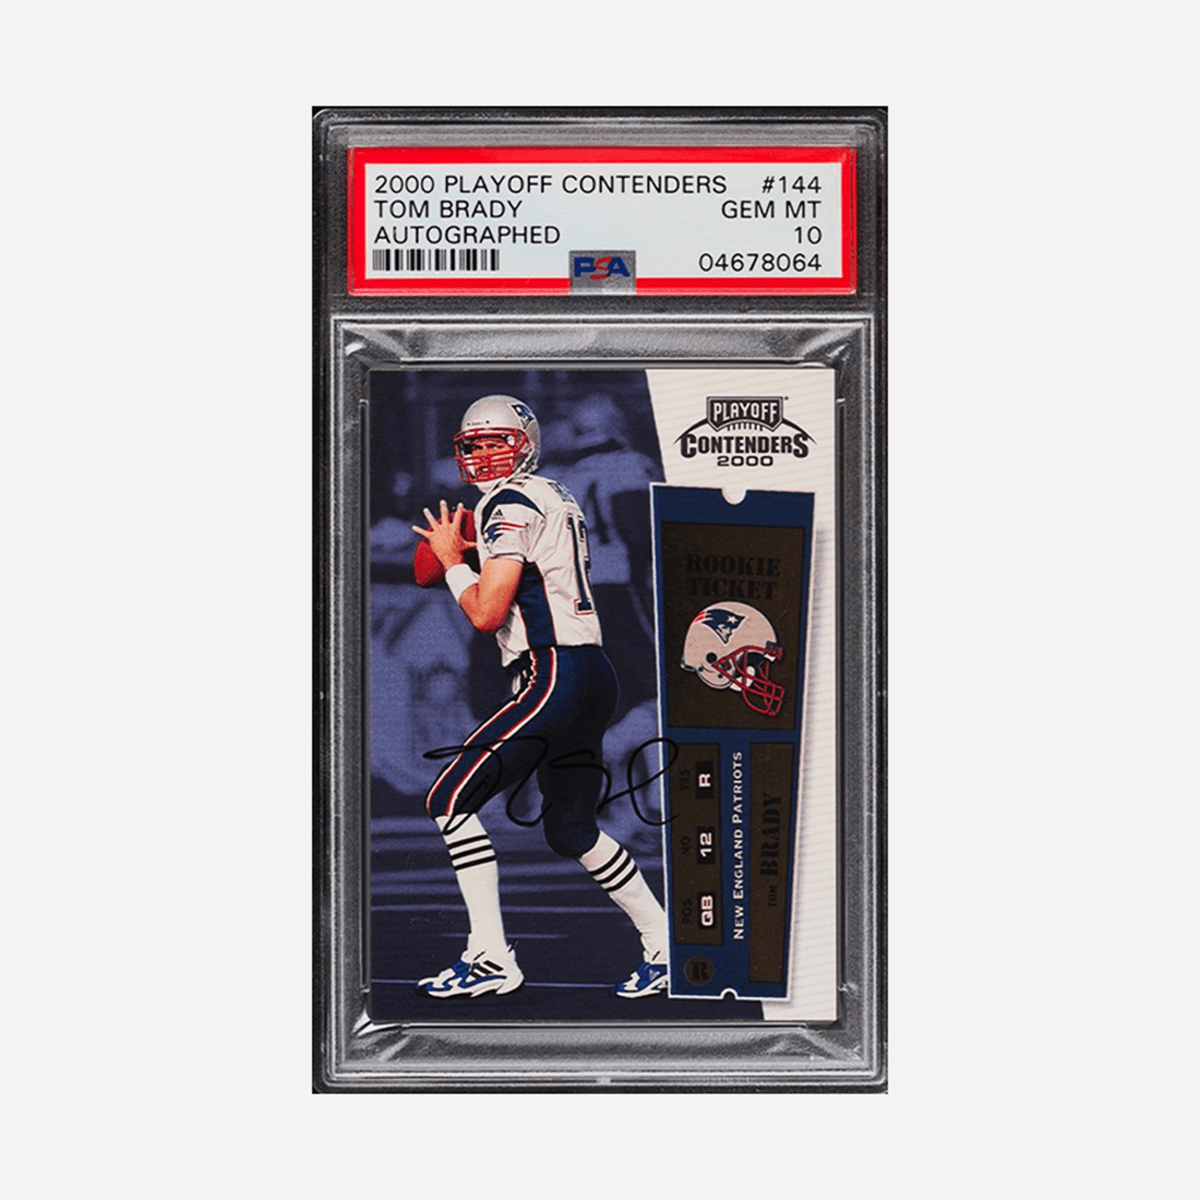 Tom Brady rookie card sells for record $2.25 million - ESPN